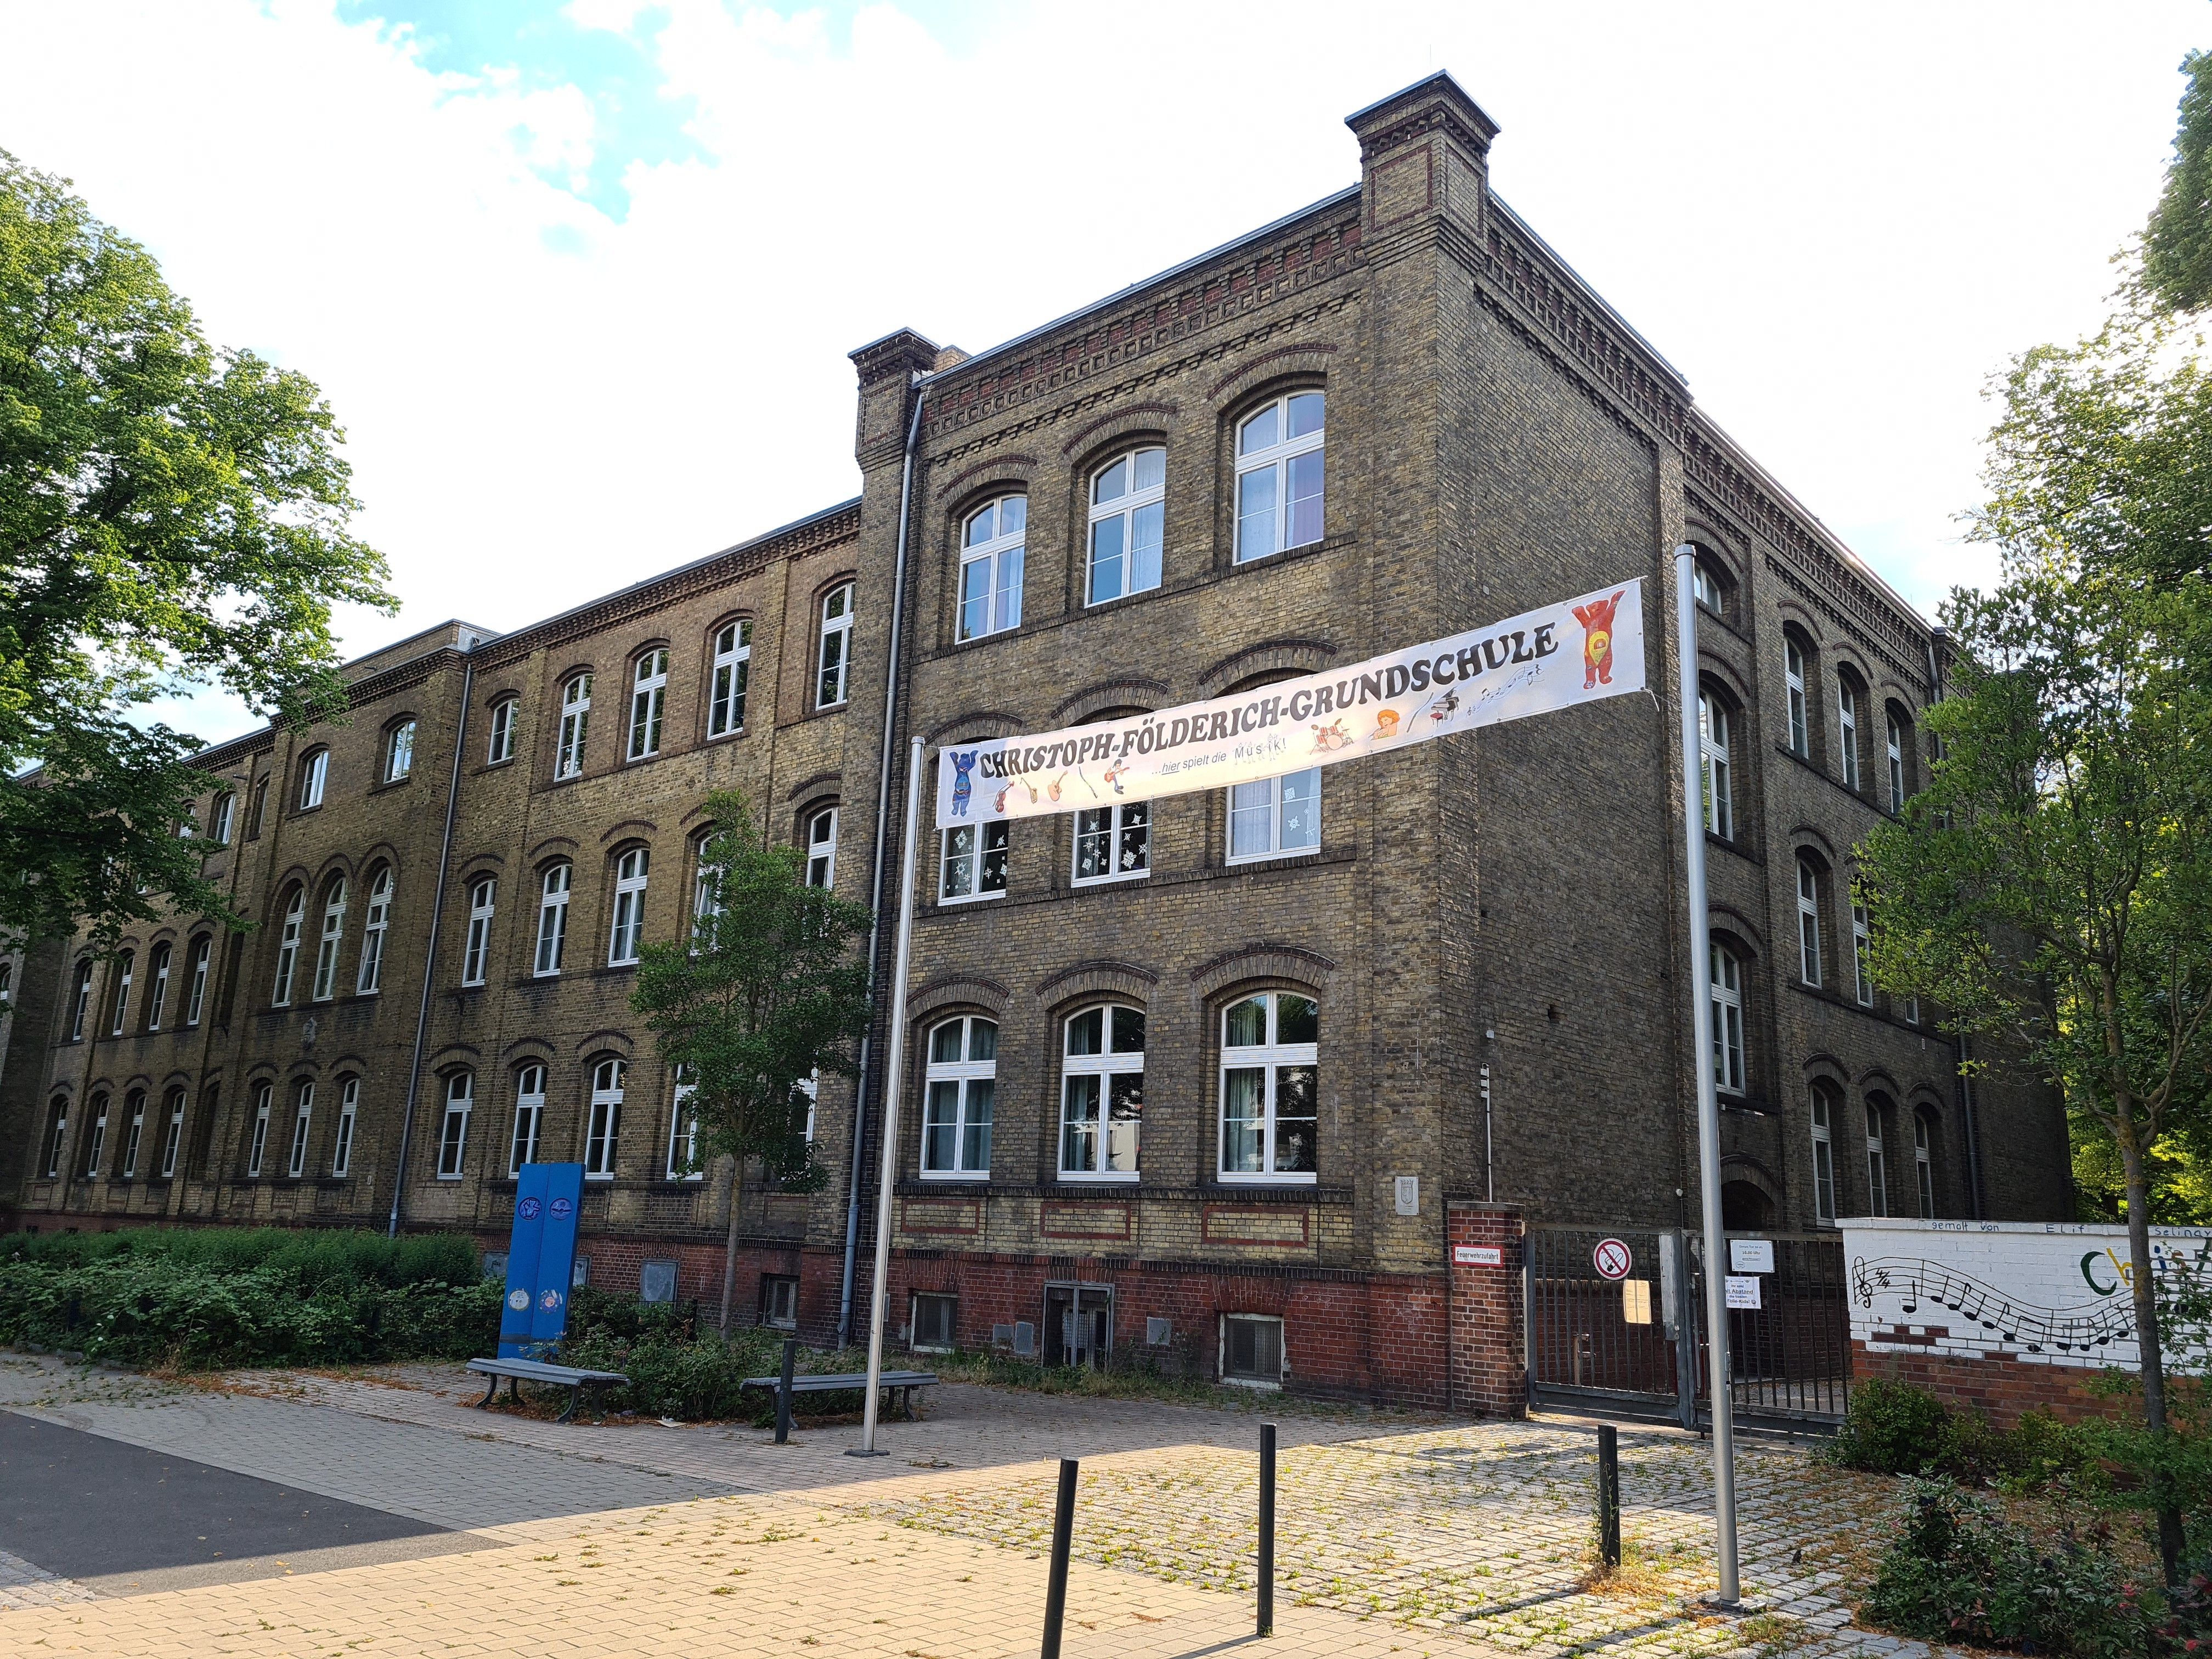 Christoph-Földerich-Grundschule Spandau